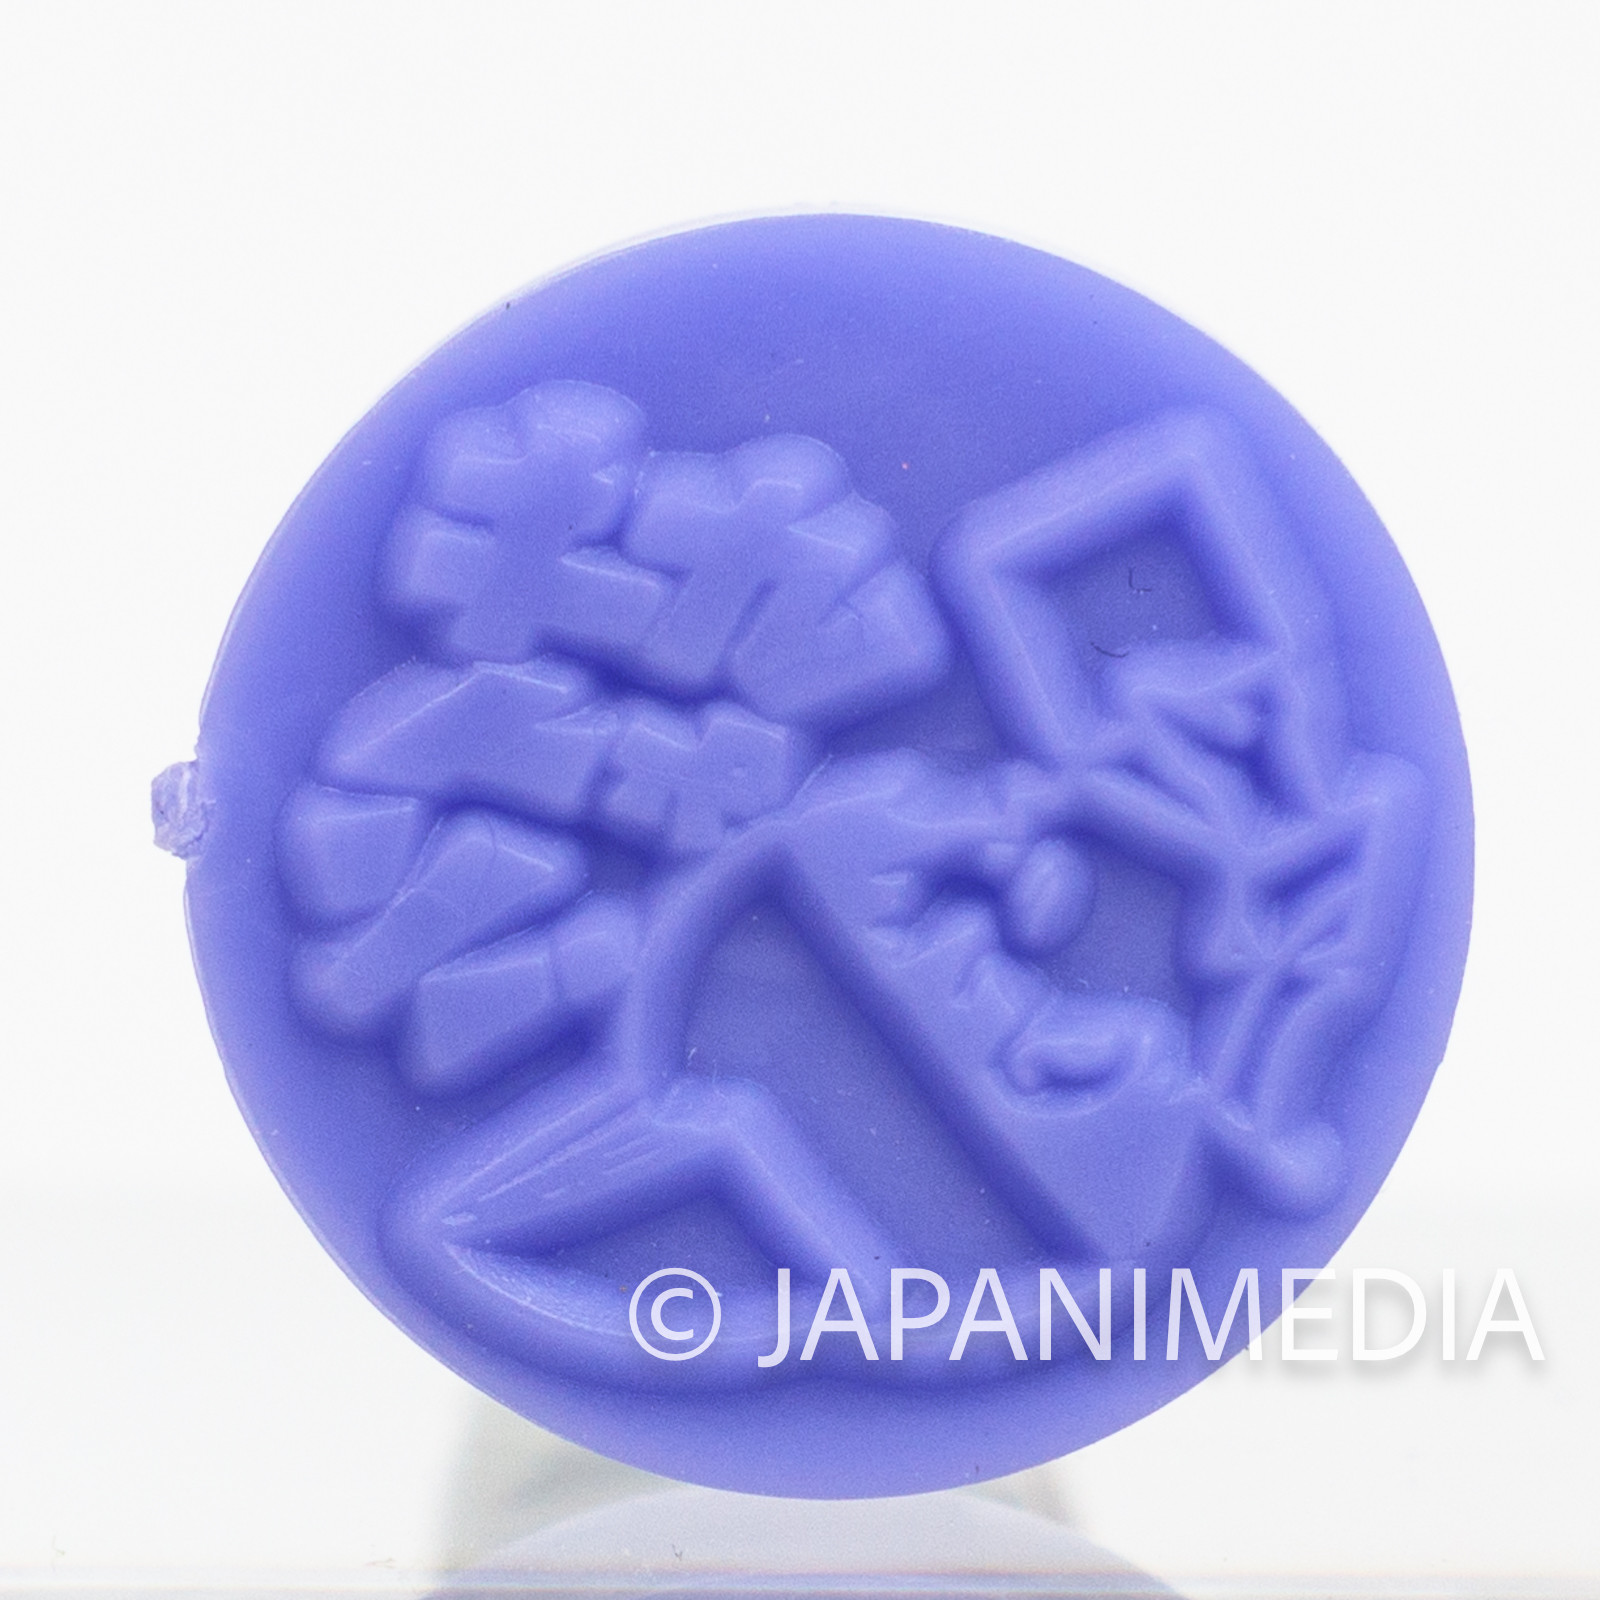 Retro Dr. Slump Arale chan Miniature Mascot Figure Stamp 6pc Set JAPAN ANIME